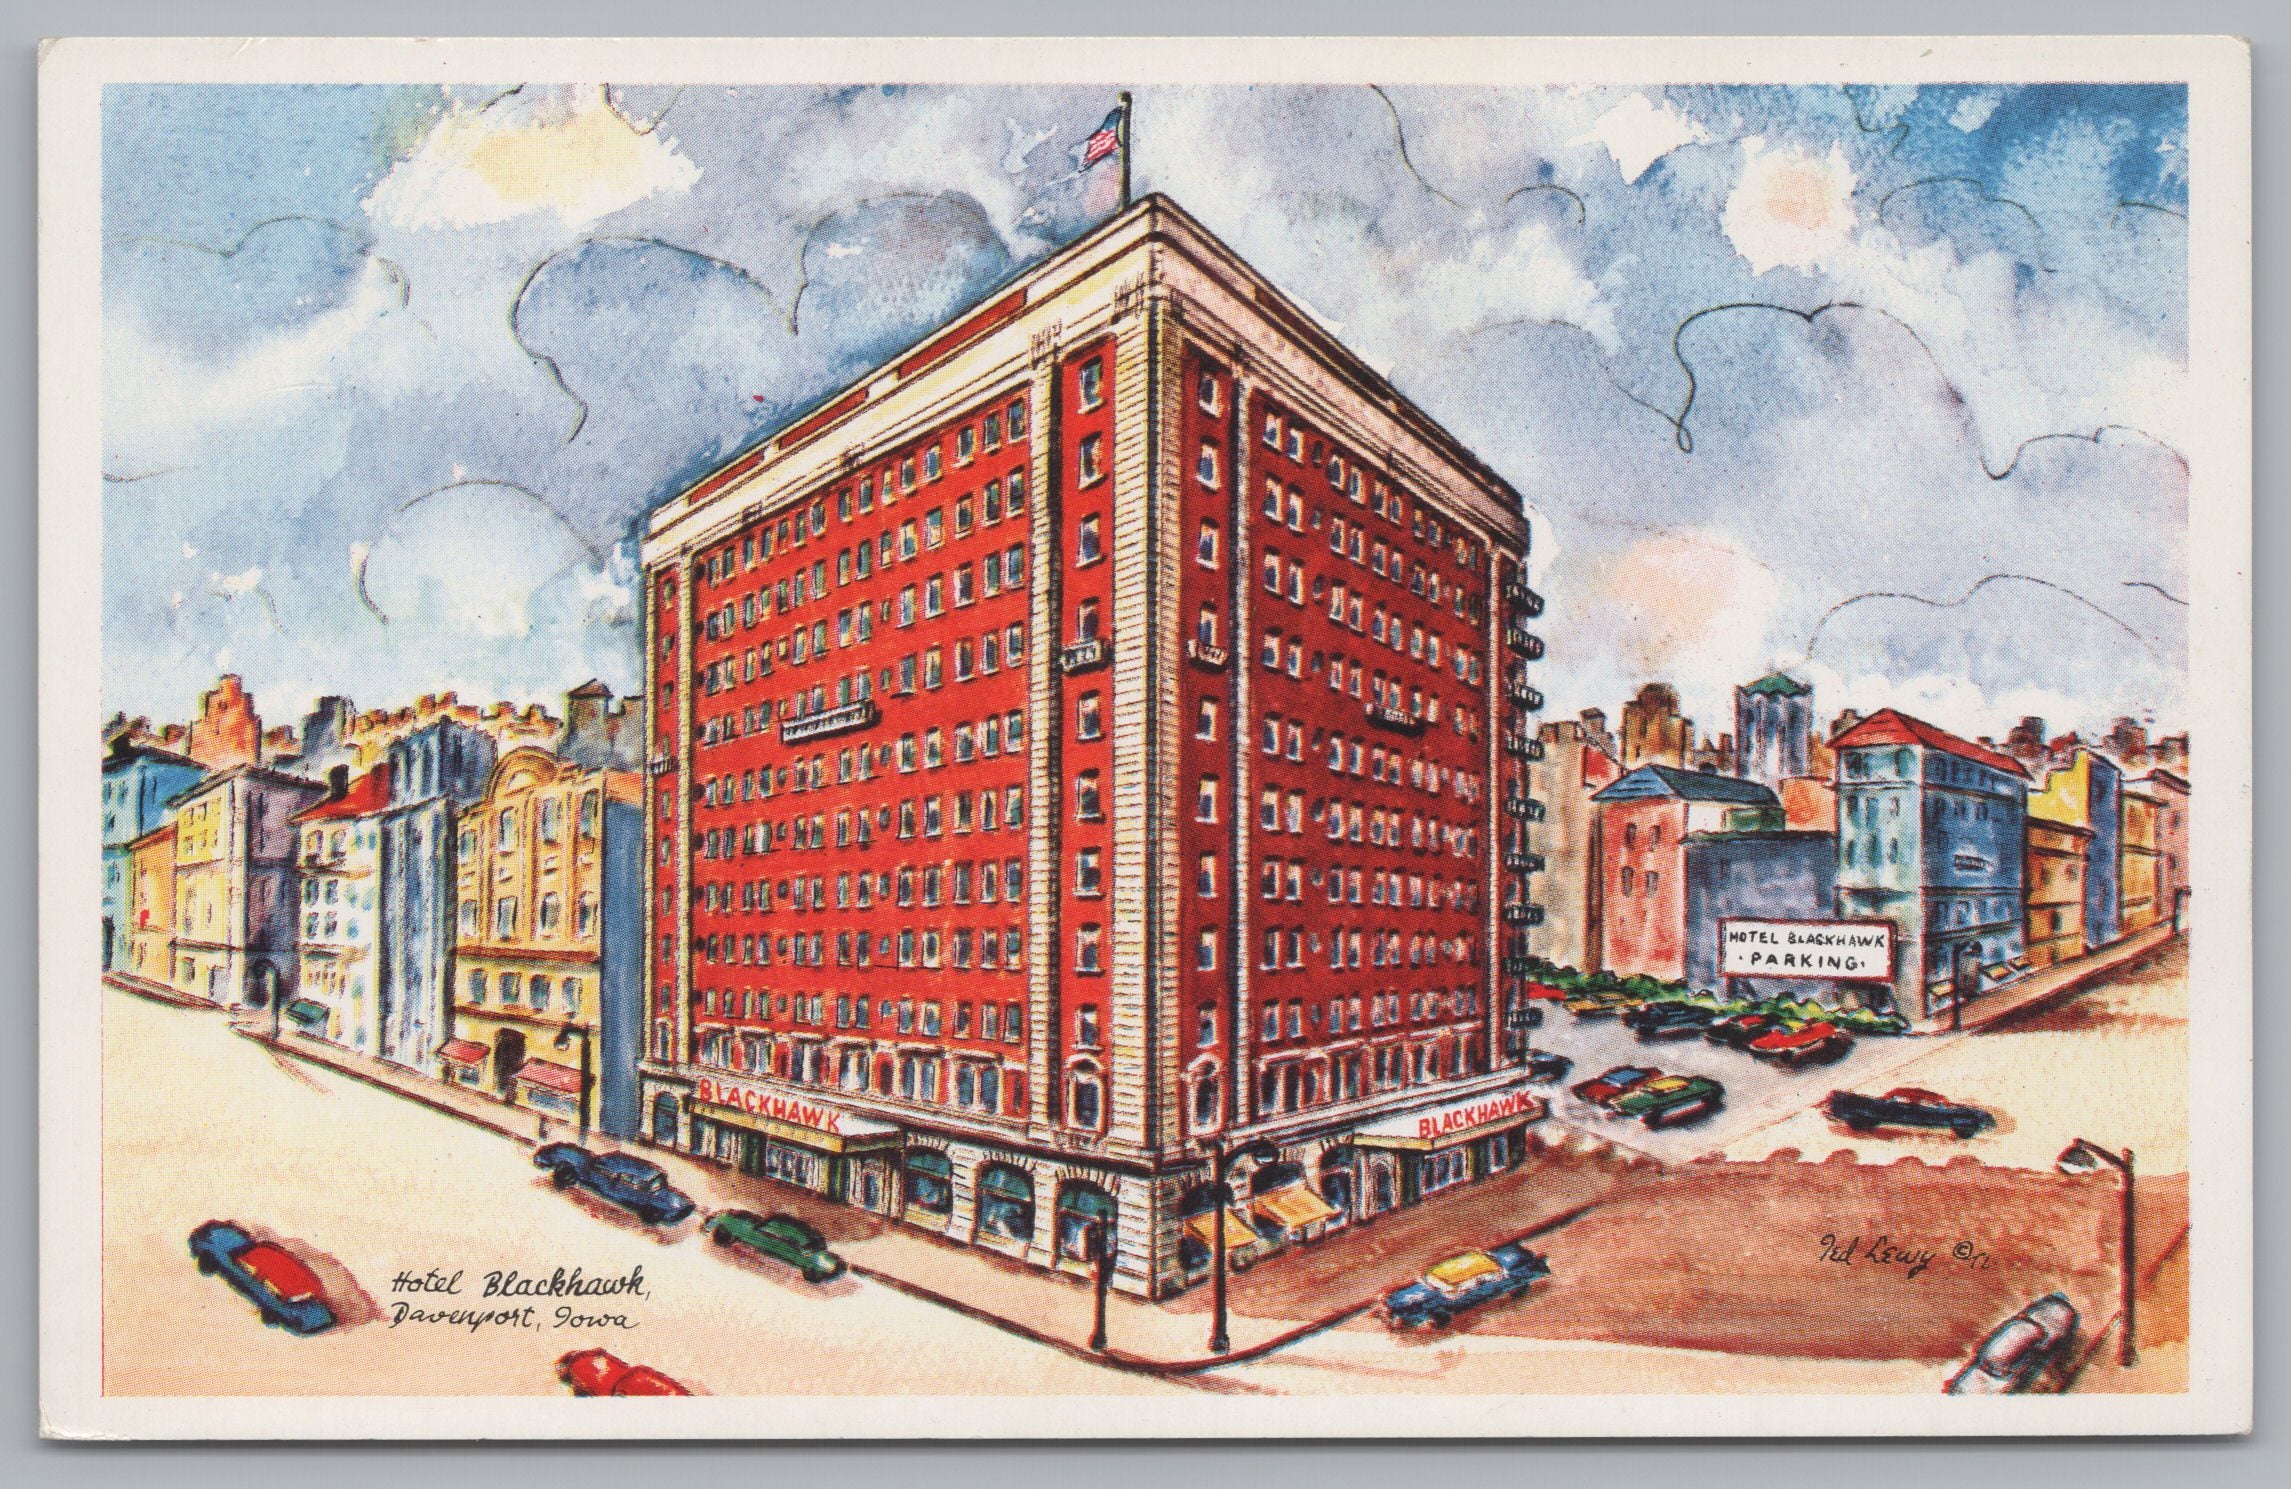 Painting Of The Blackhawk Hotel, Davenport, Iowa, USA, Vintage Post Card.